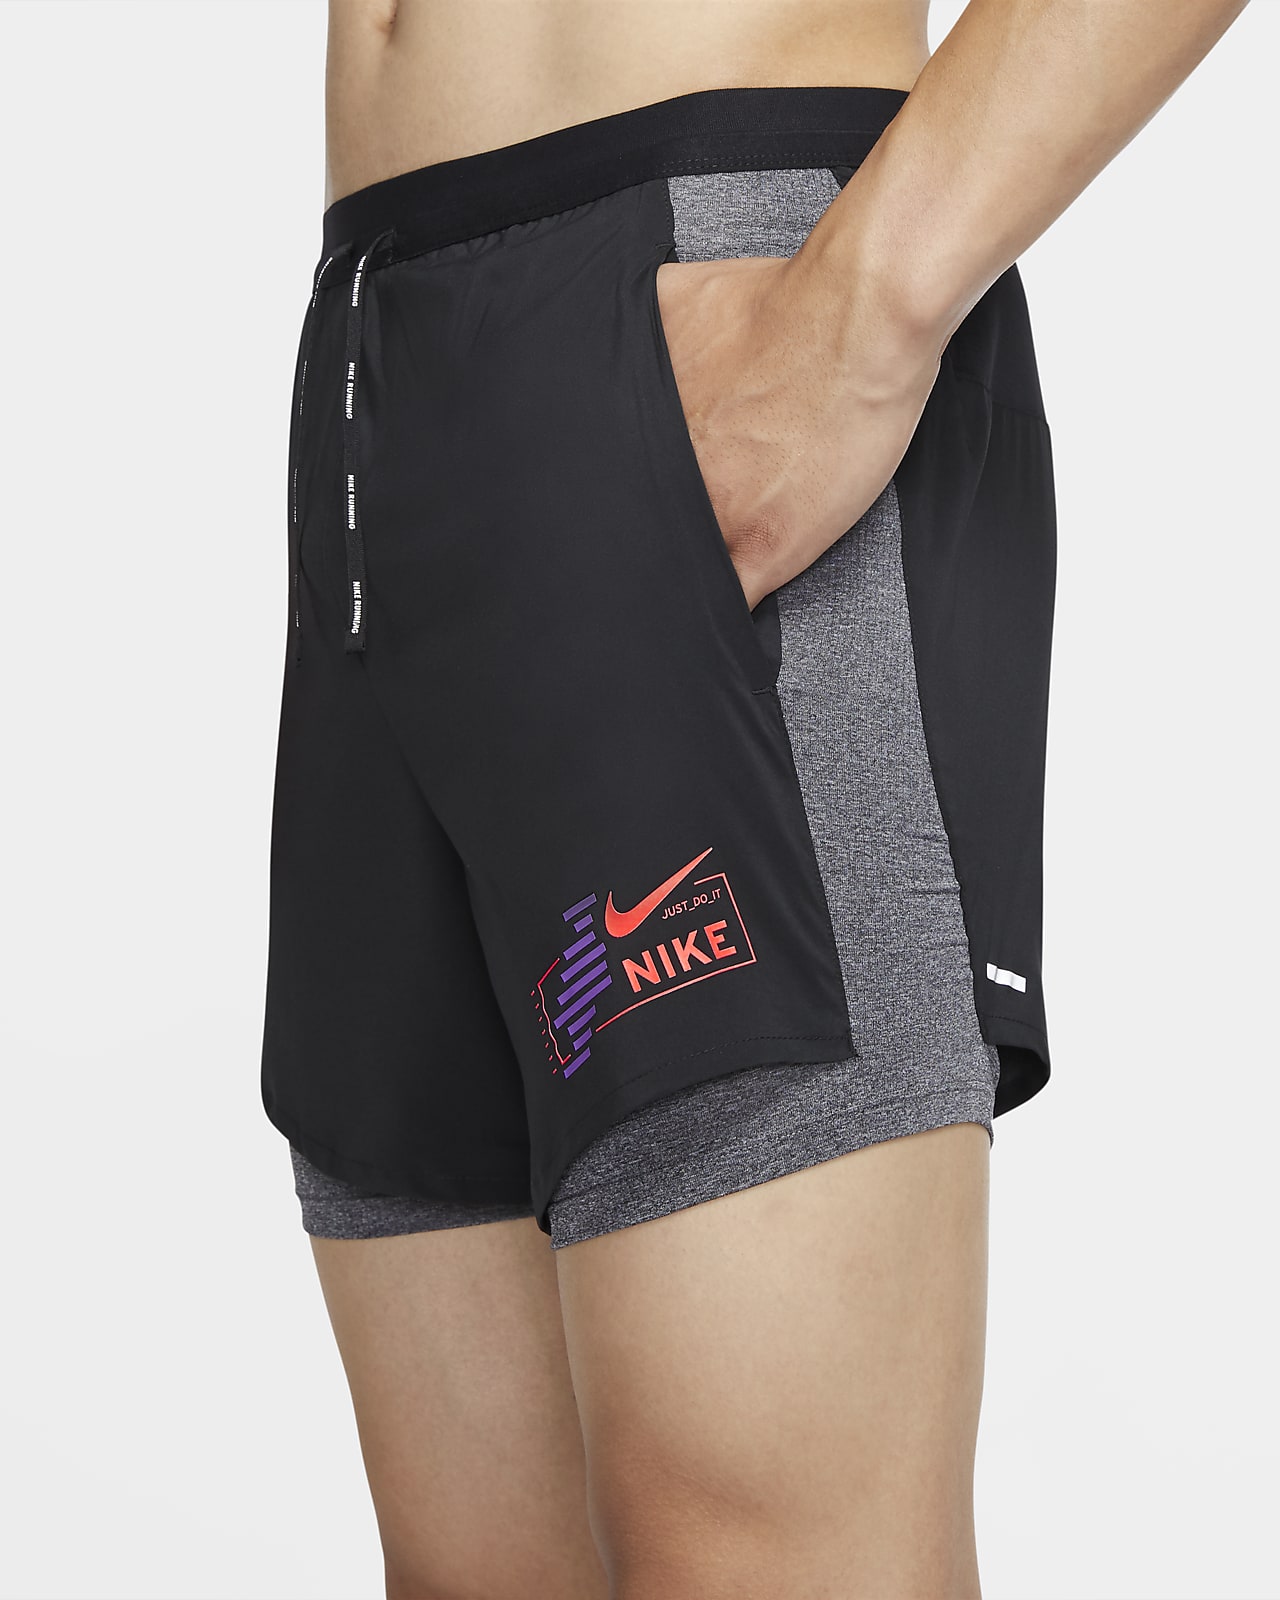 nike running future fast shorts